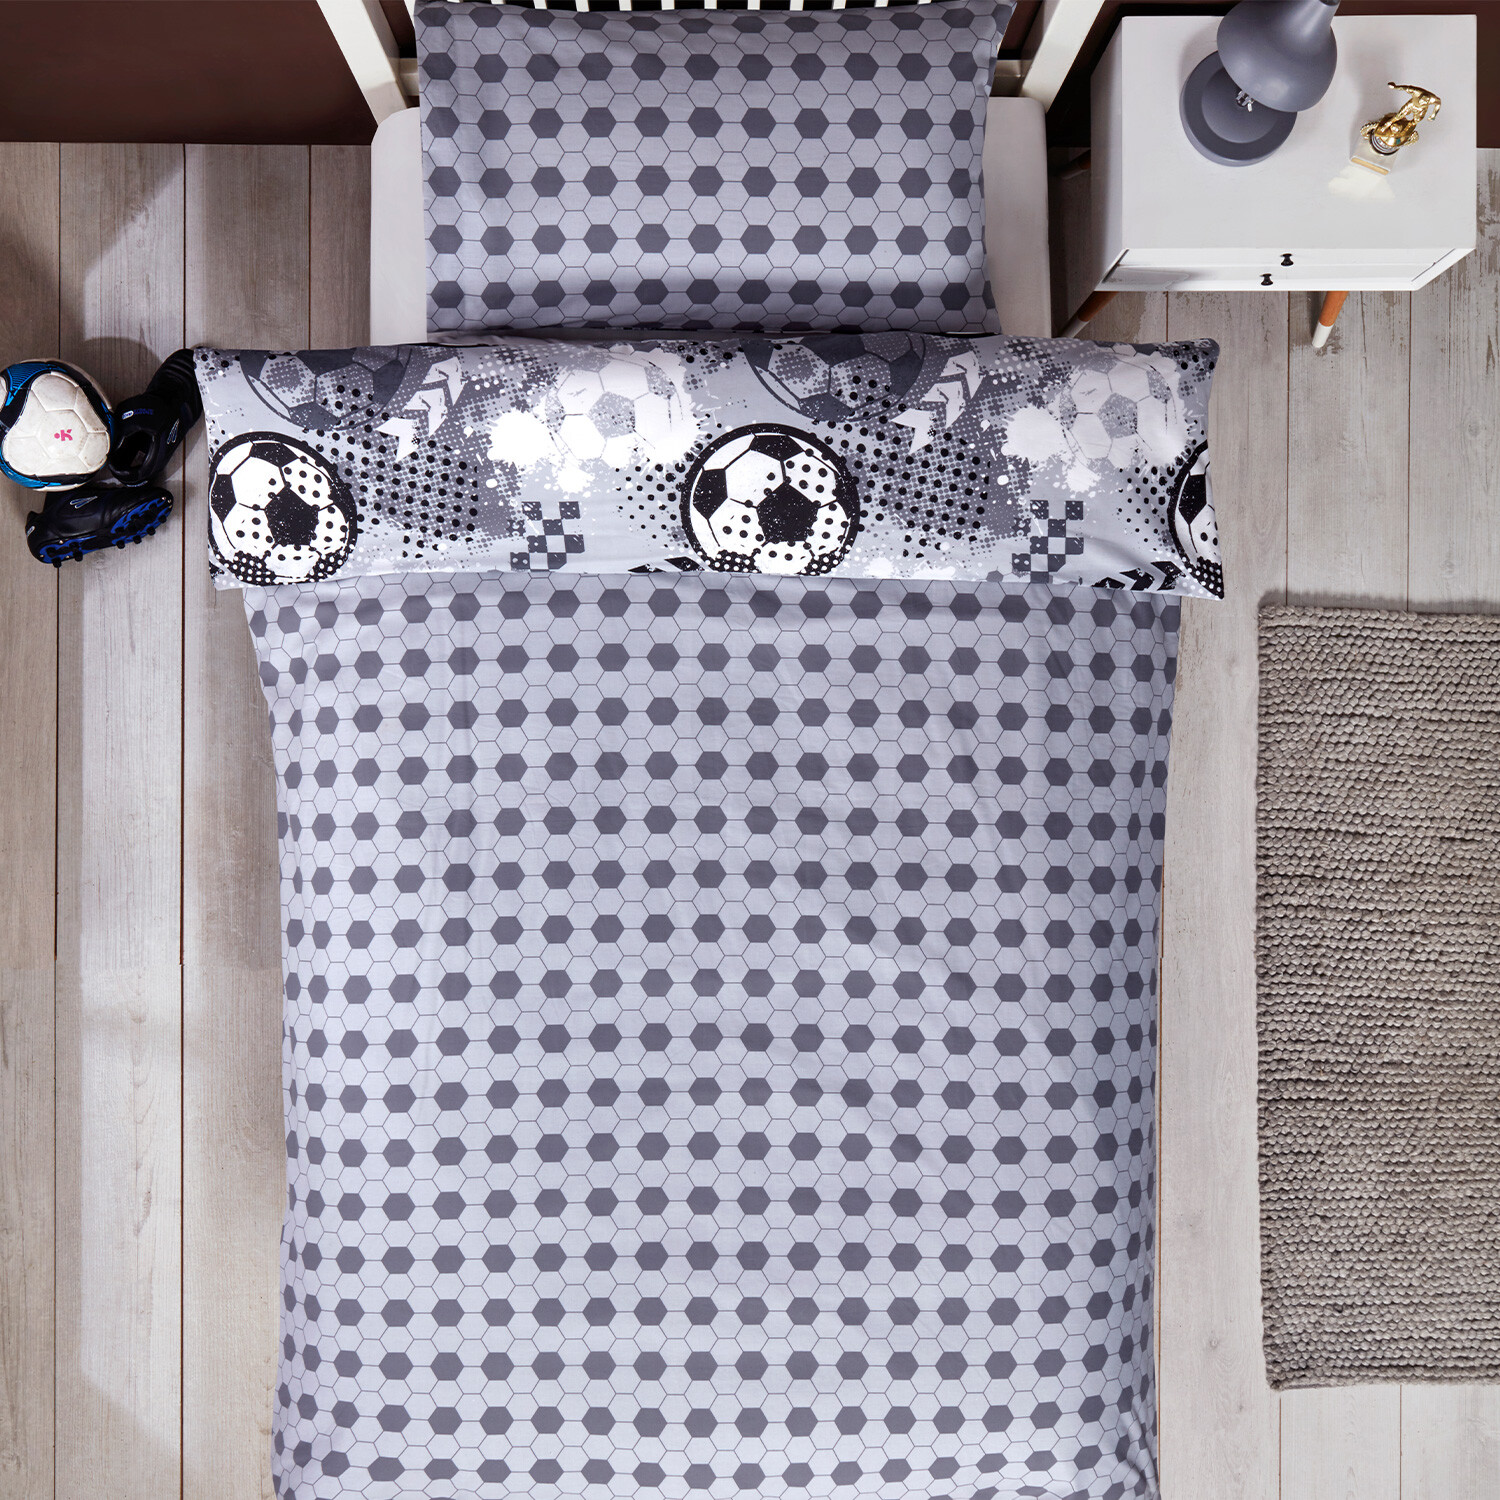 Football Duvet Cover and Pillowcase Set - Grey Image 5